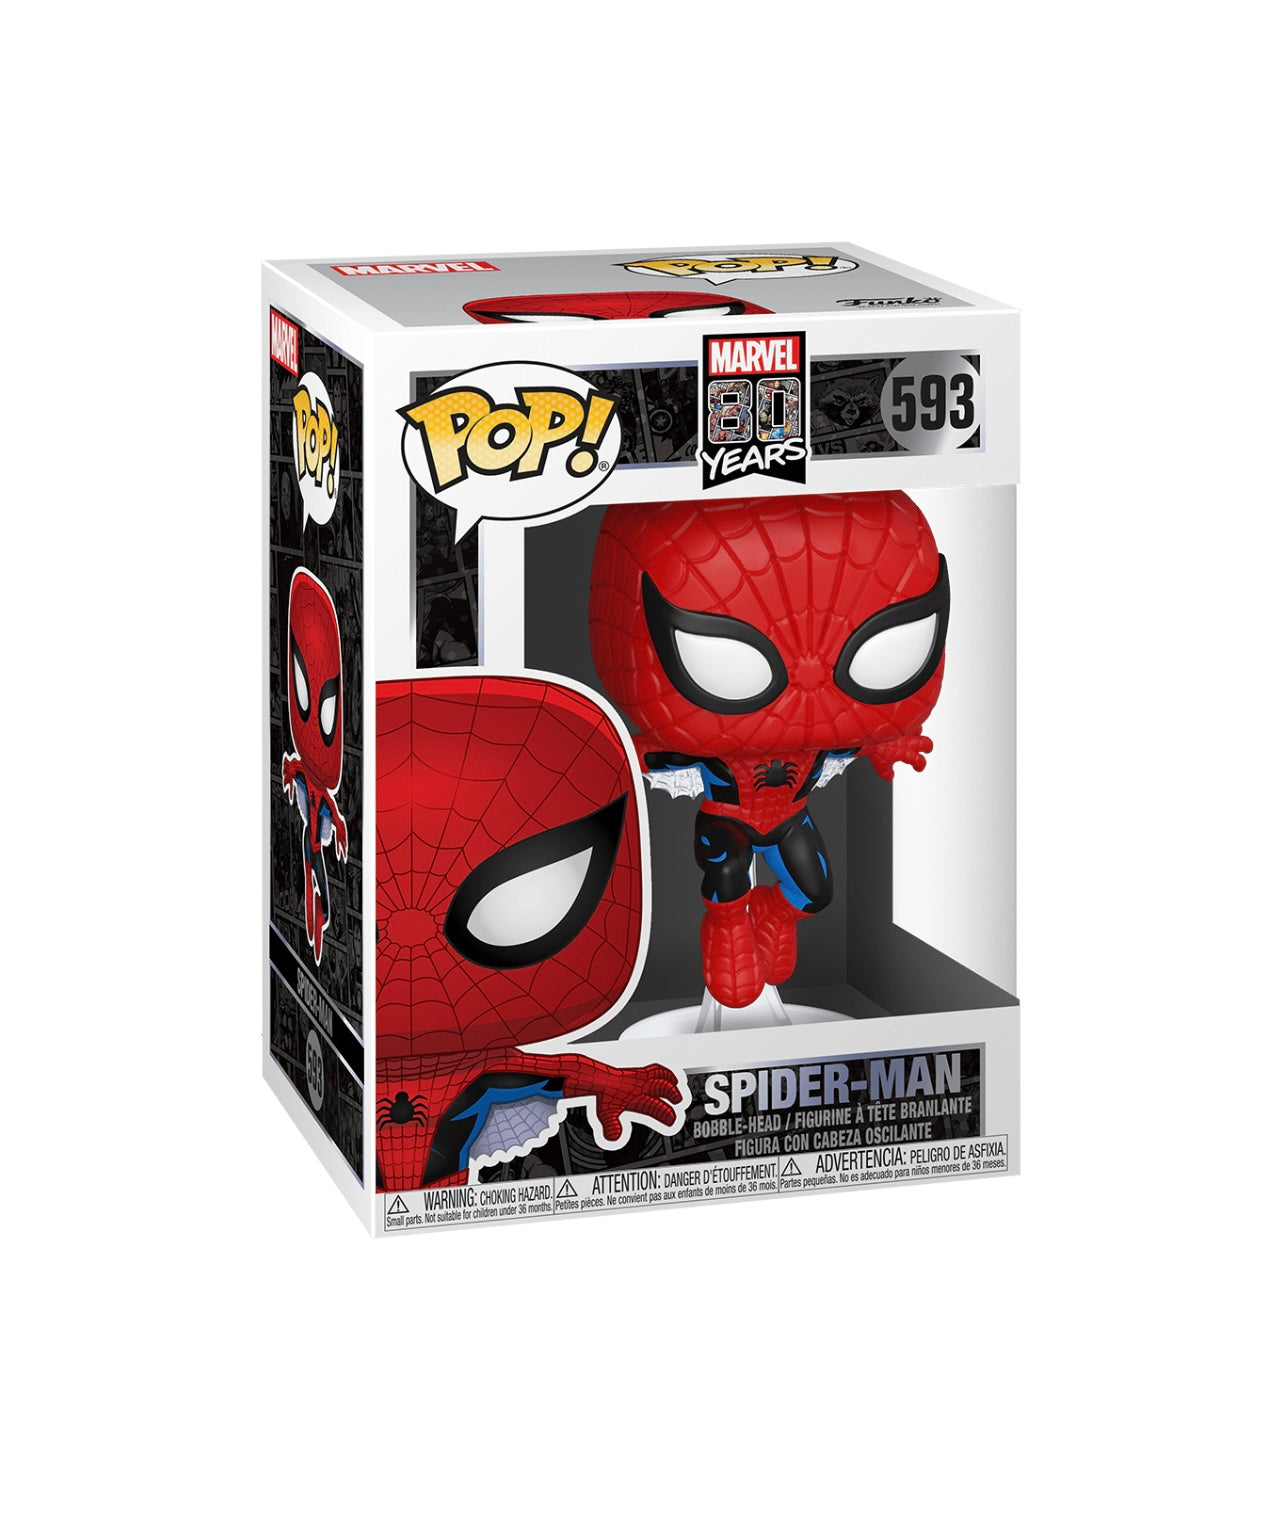 POP! Marvel Spider-Man #593